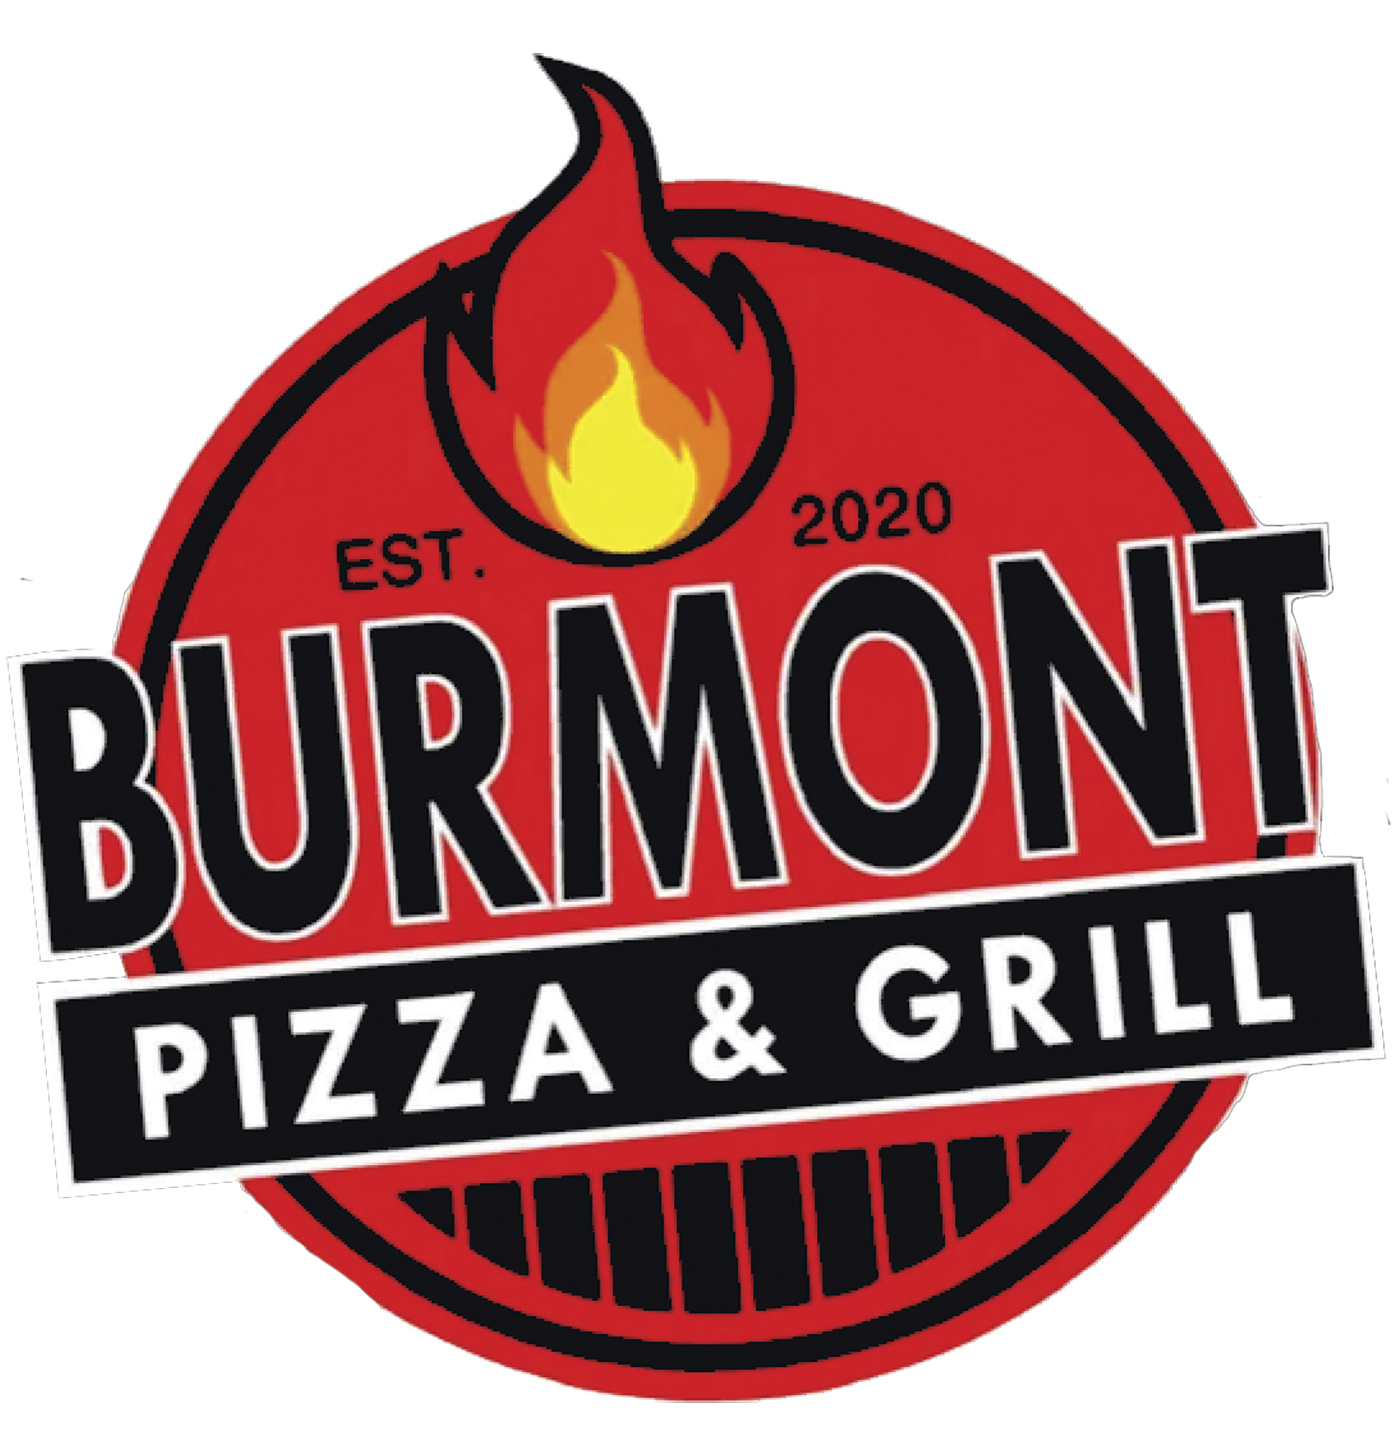 Burmont Pizza logo